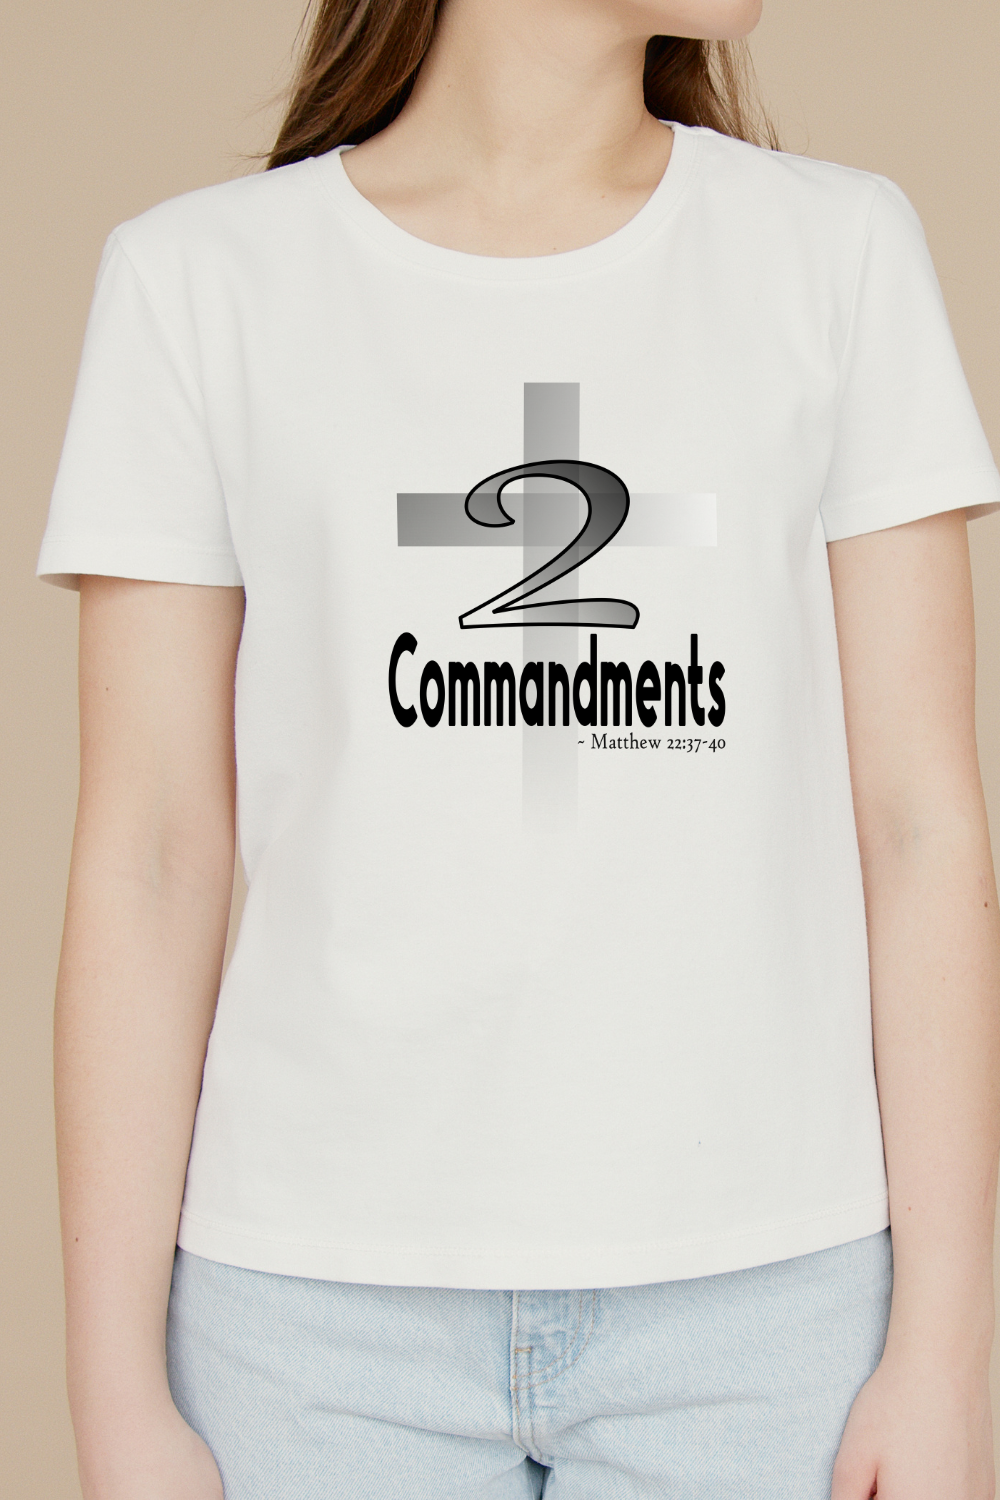 Two commandments from Matthew 22:37-40 Tshirt for women